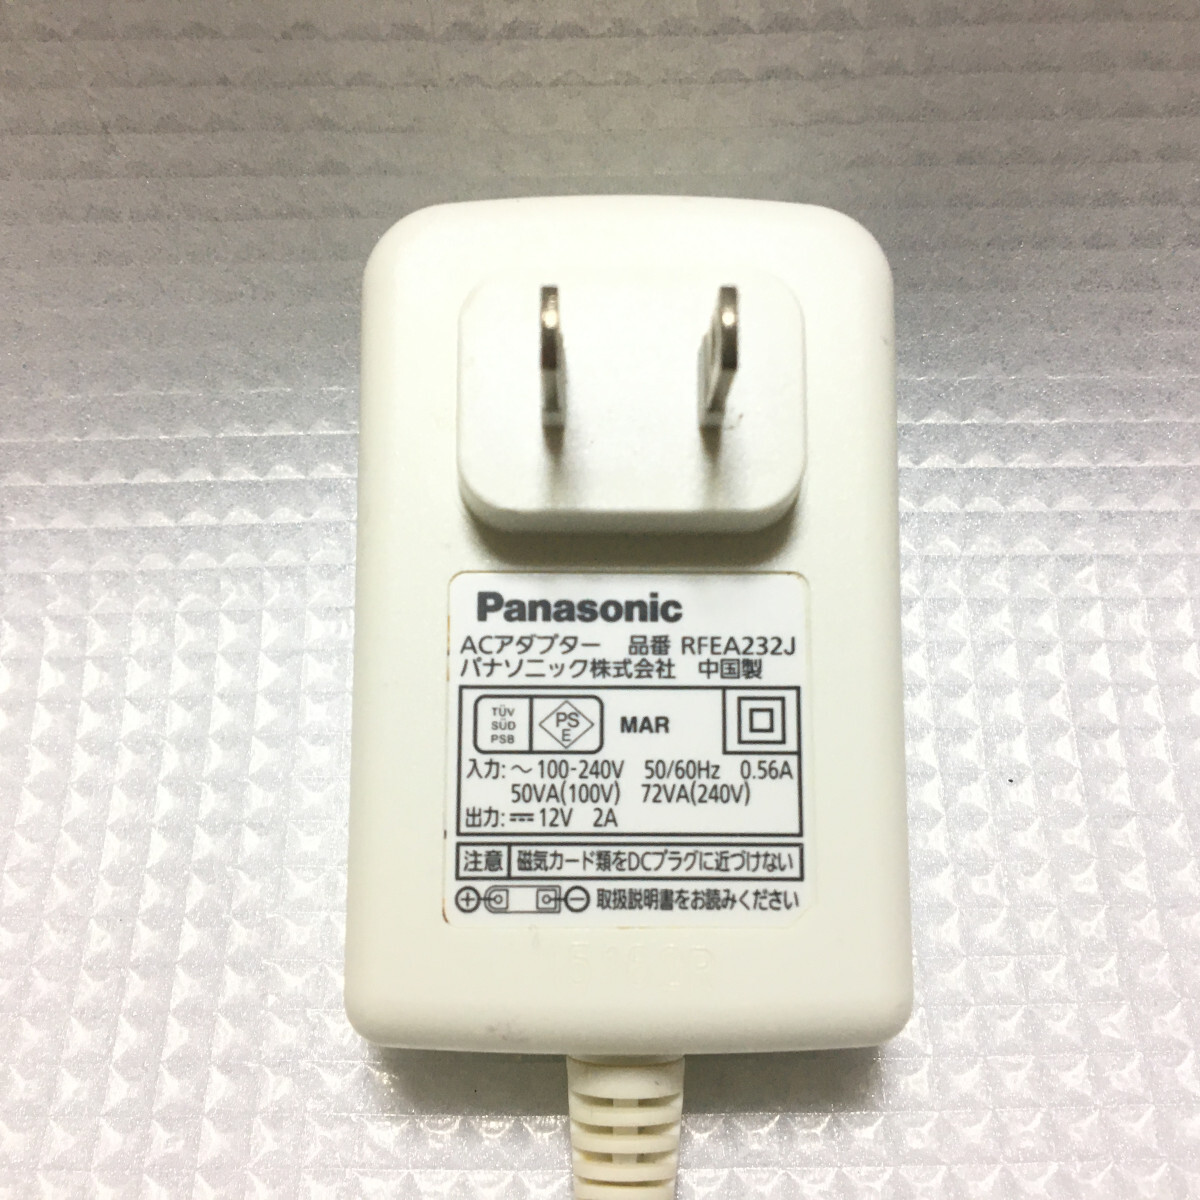 # Panasonic оригинальный AC адаптор RFEA232J-5S viera электрический кабель UN-15T5-W UN-DM10C1-K UN-JD10T2 UN-JD10T3 UN-DM15C1-K UN-10E5-W